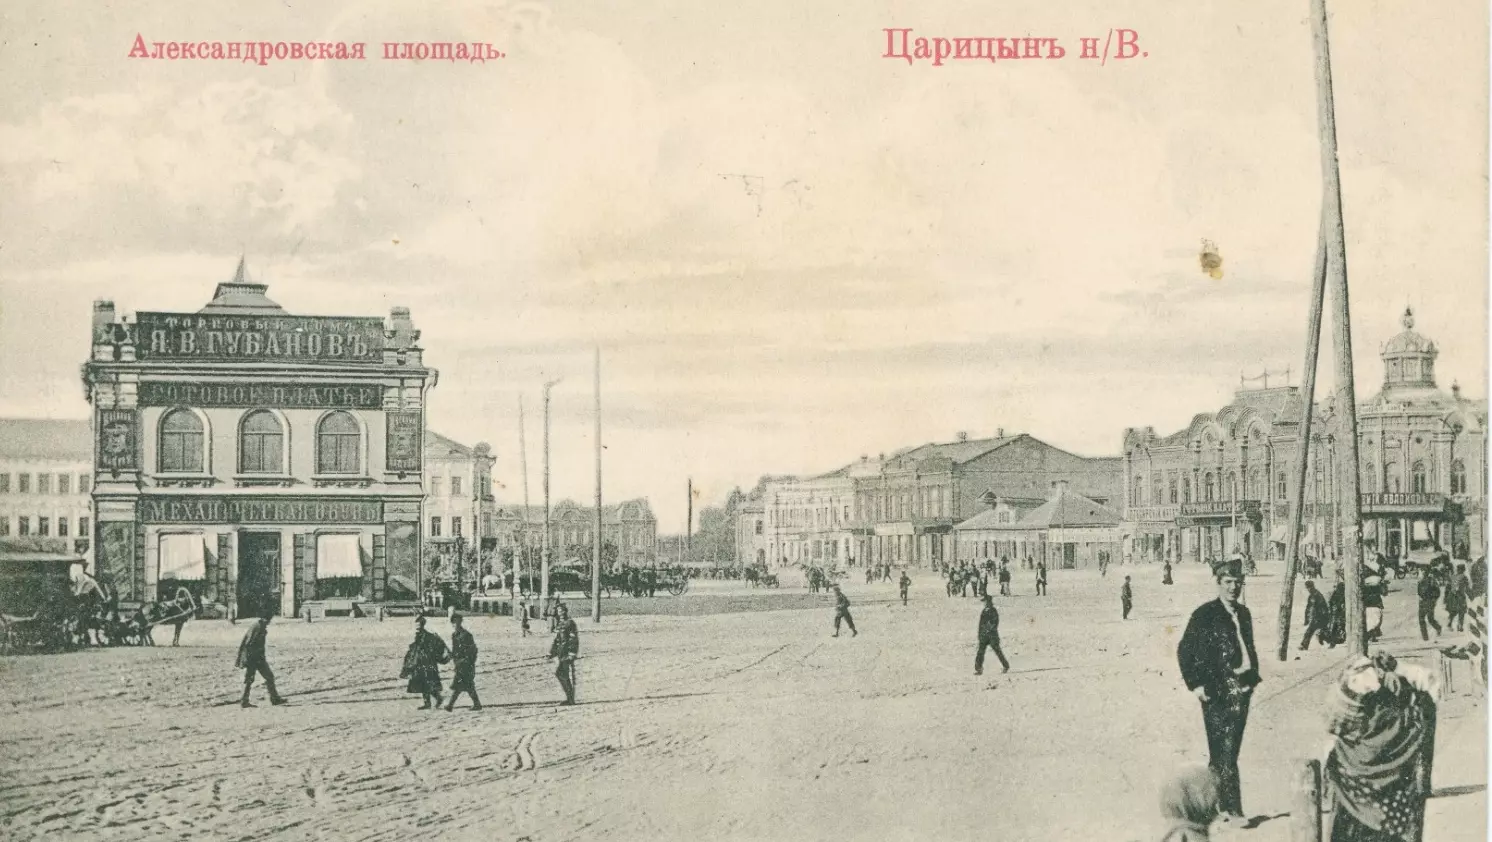 Вид на Александровскую площадь в Царицыне в начале 1910-х